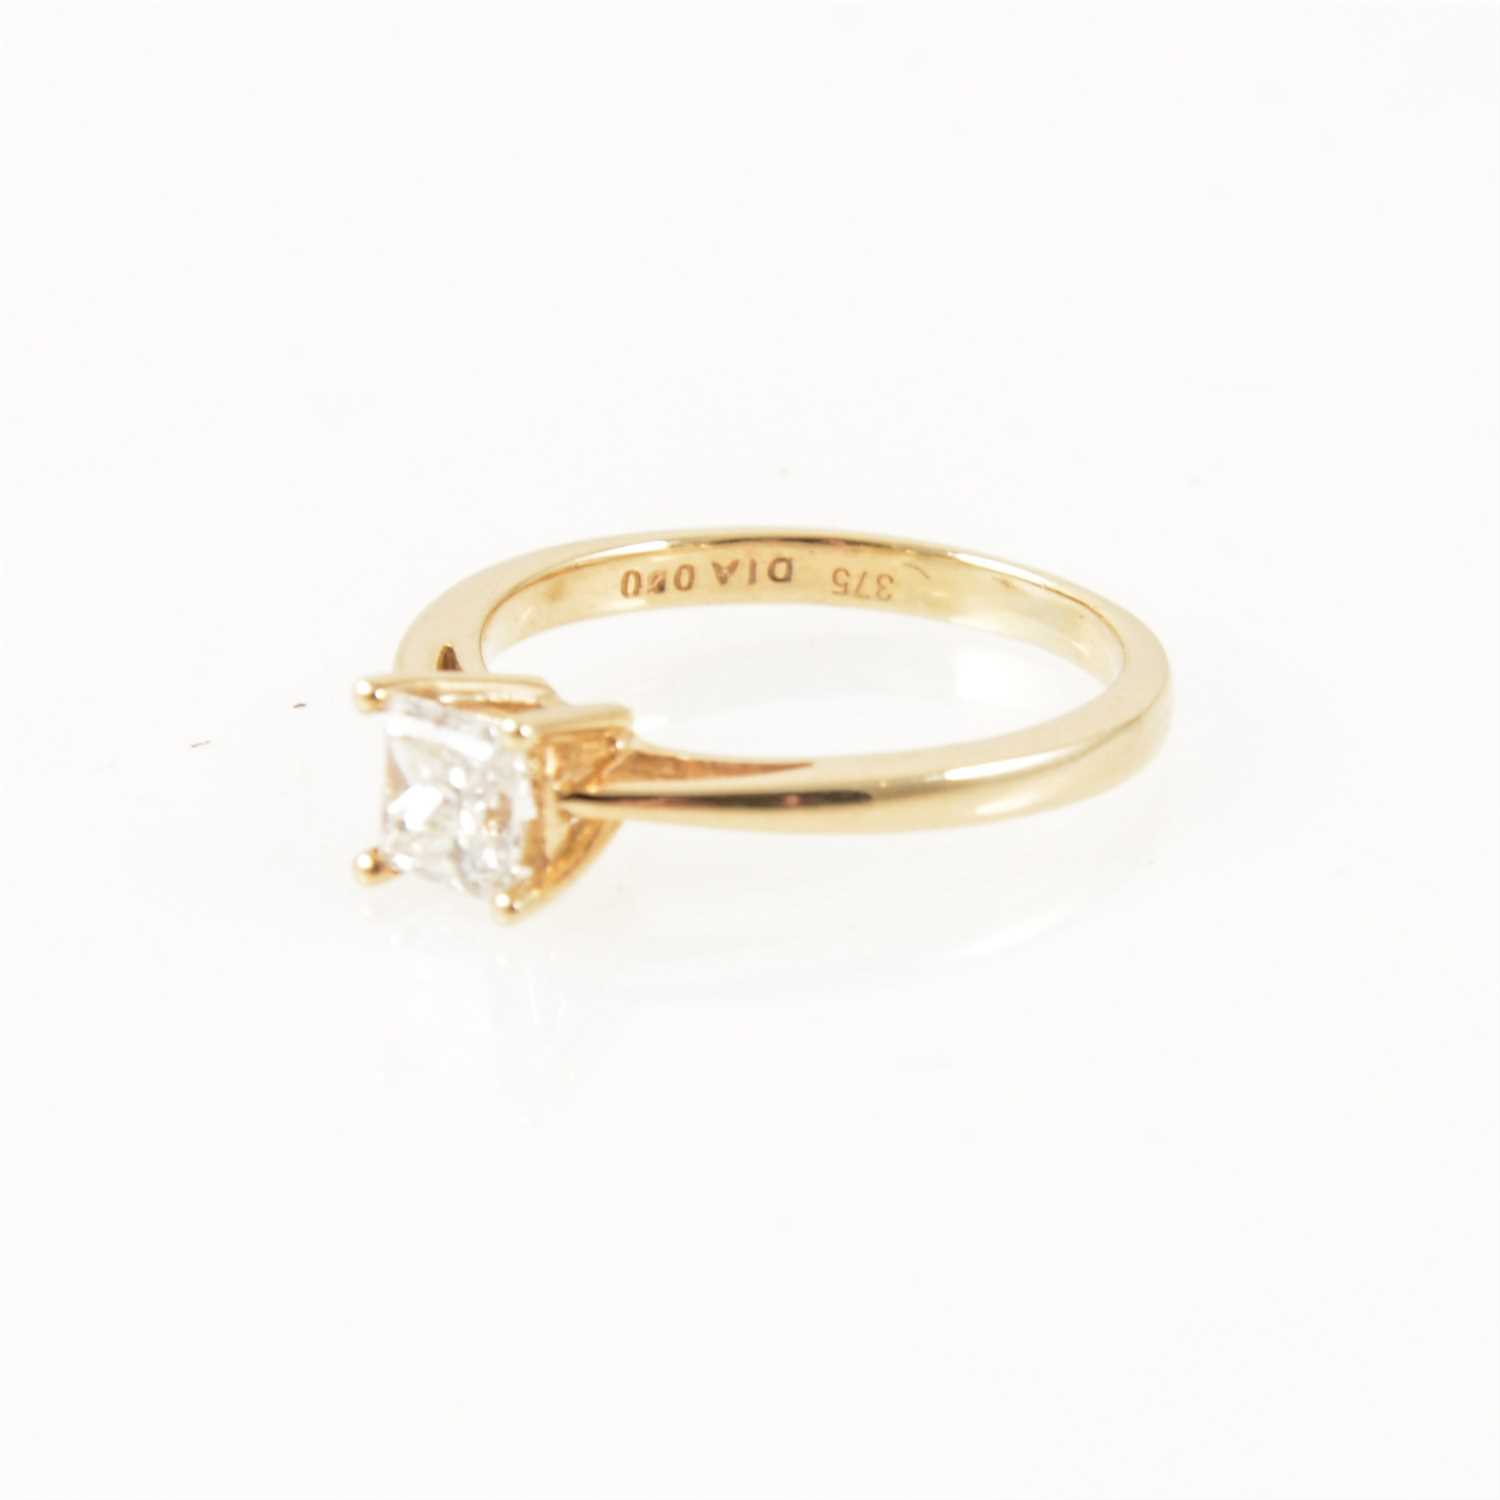 Lot 220 - A diamond solitaire ring, princess cut stone, 9 carat yellow gold mount